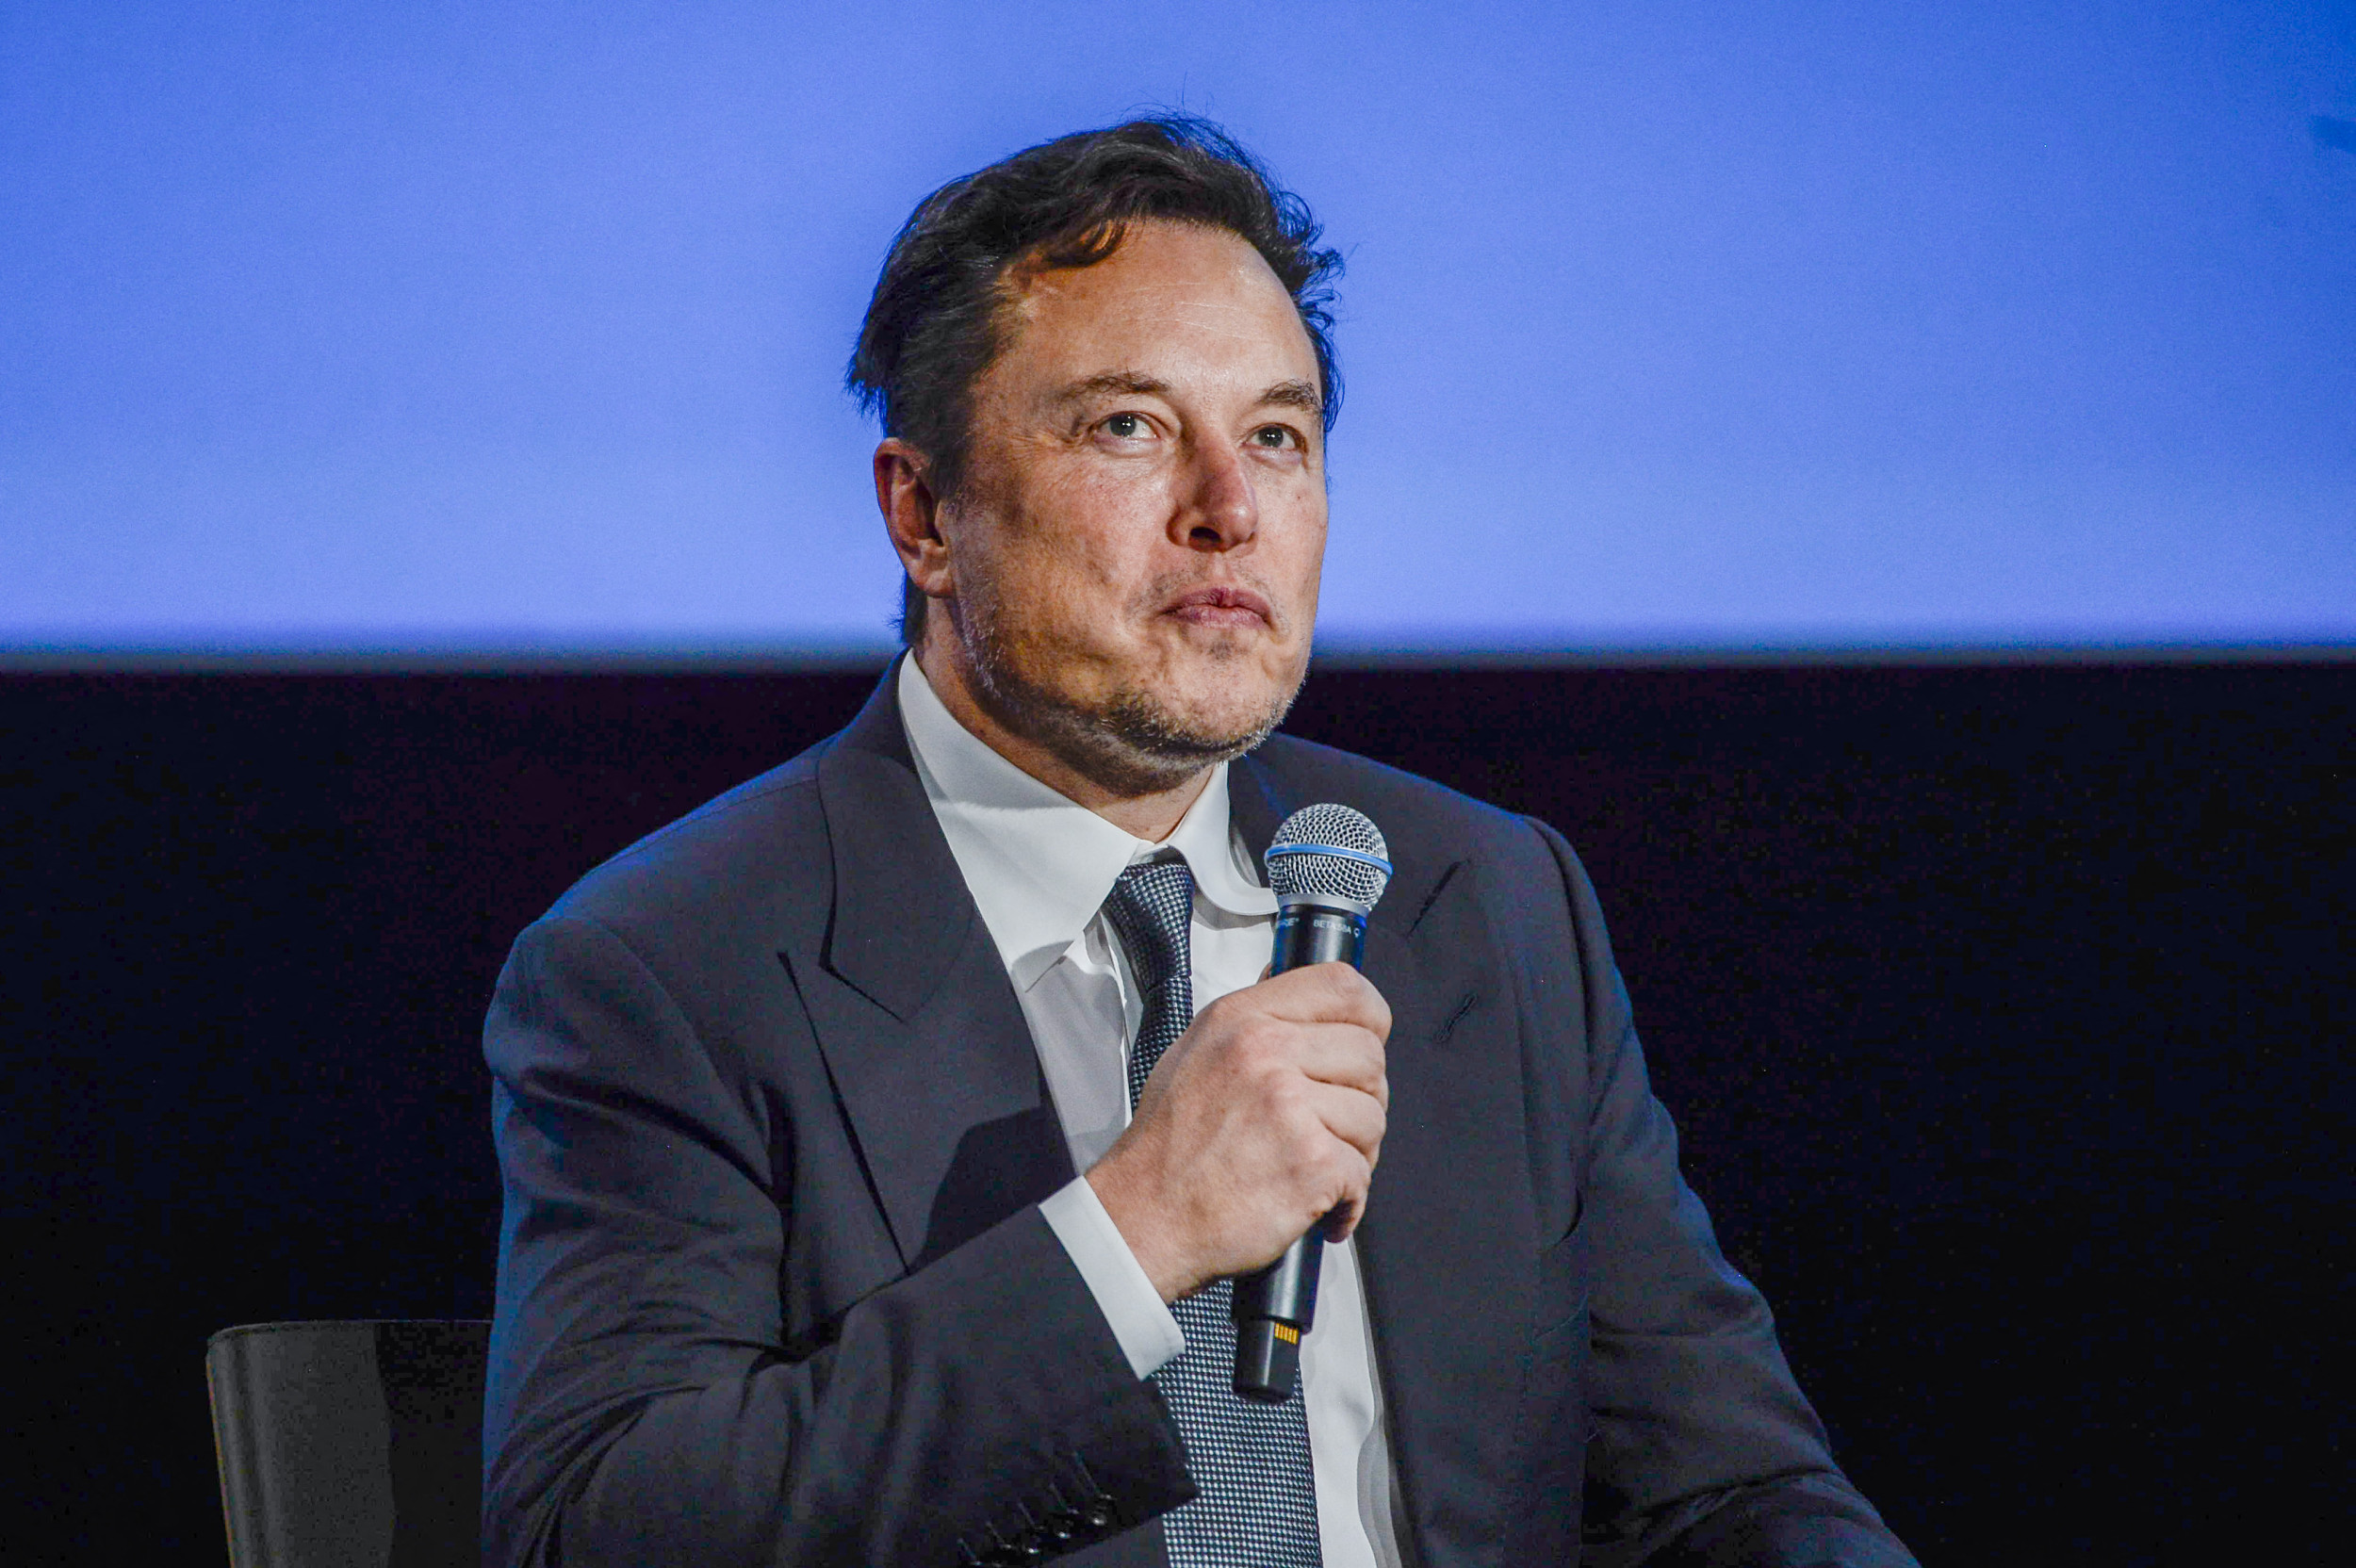 Elon Musk Criticized for Ukraine Starlink Stance Despite SpaceX's Billions